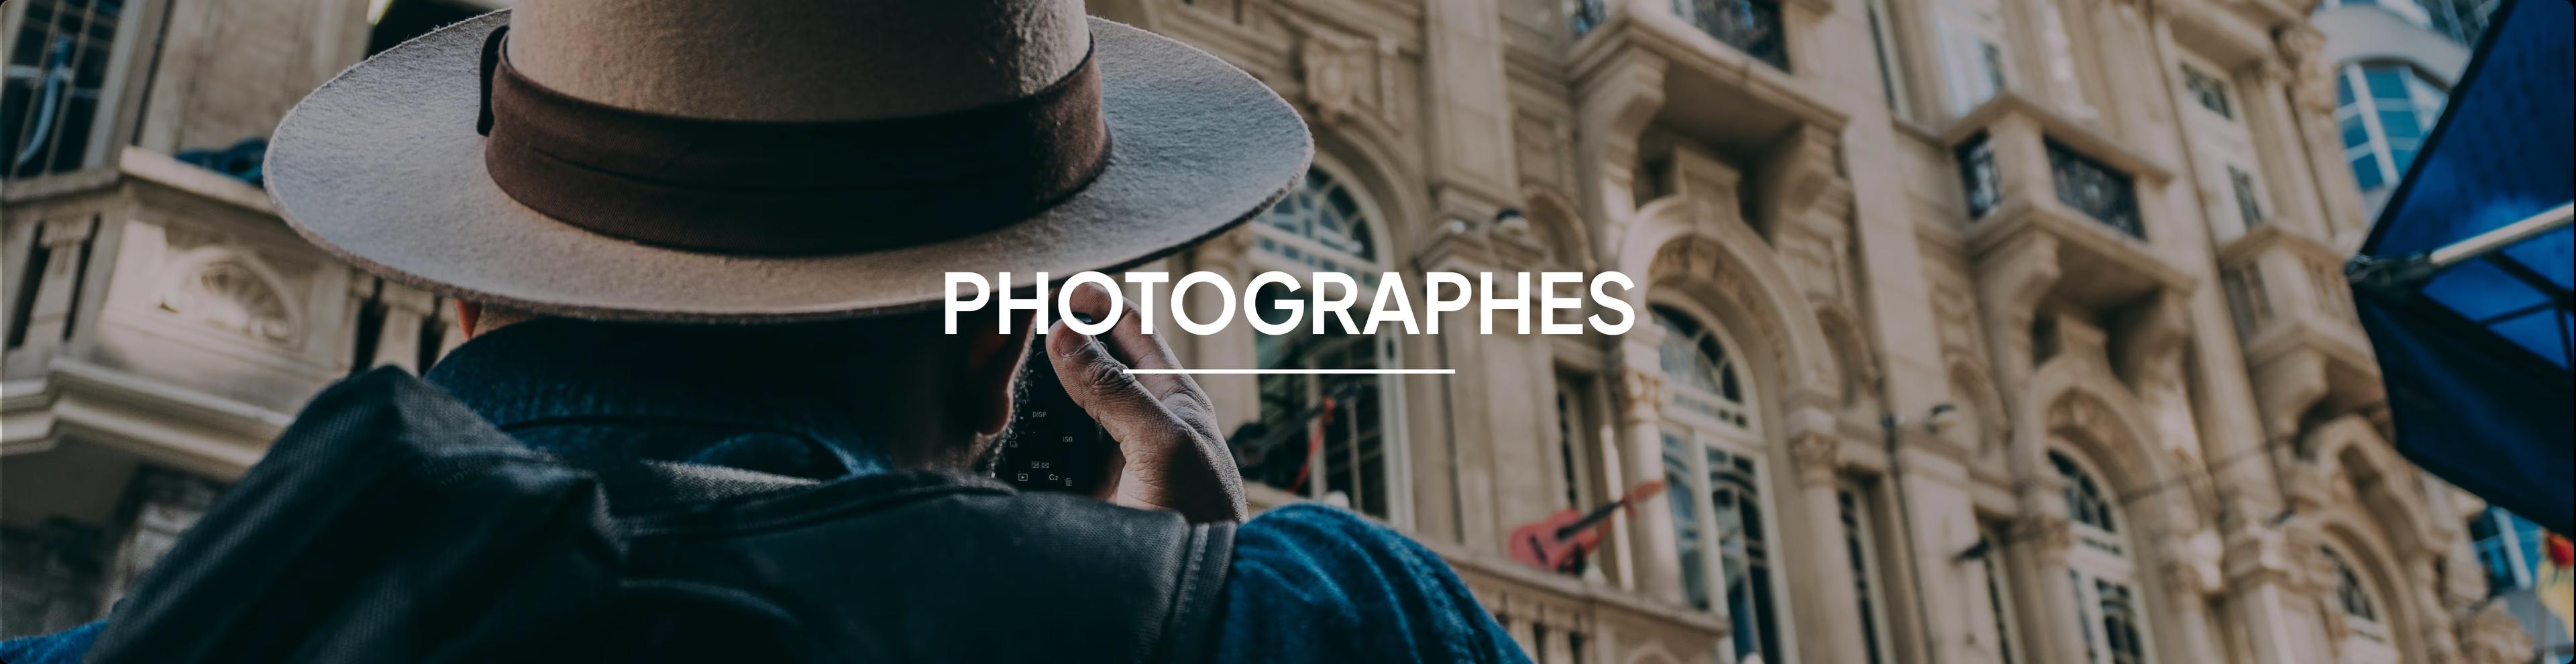 photographers-header